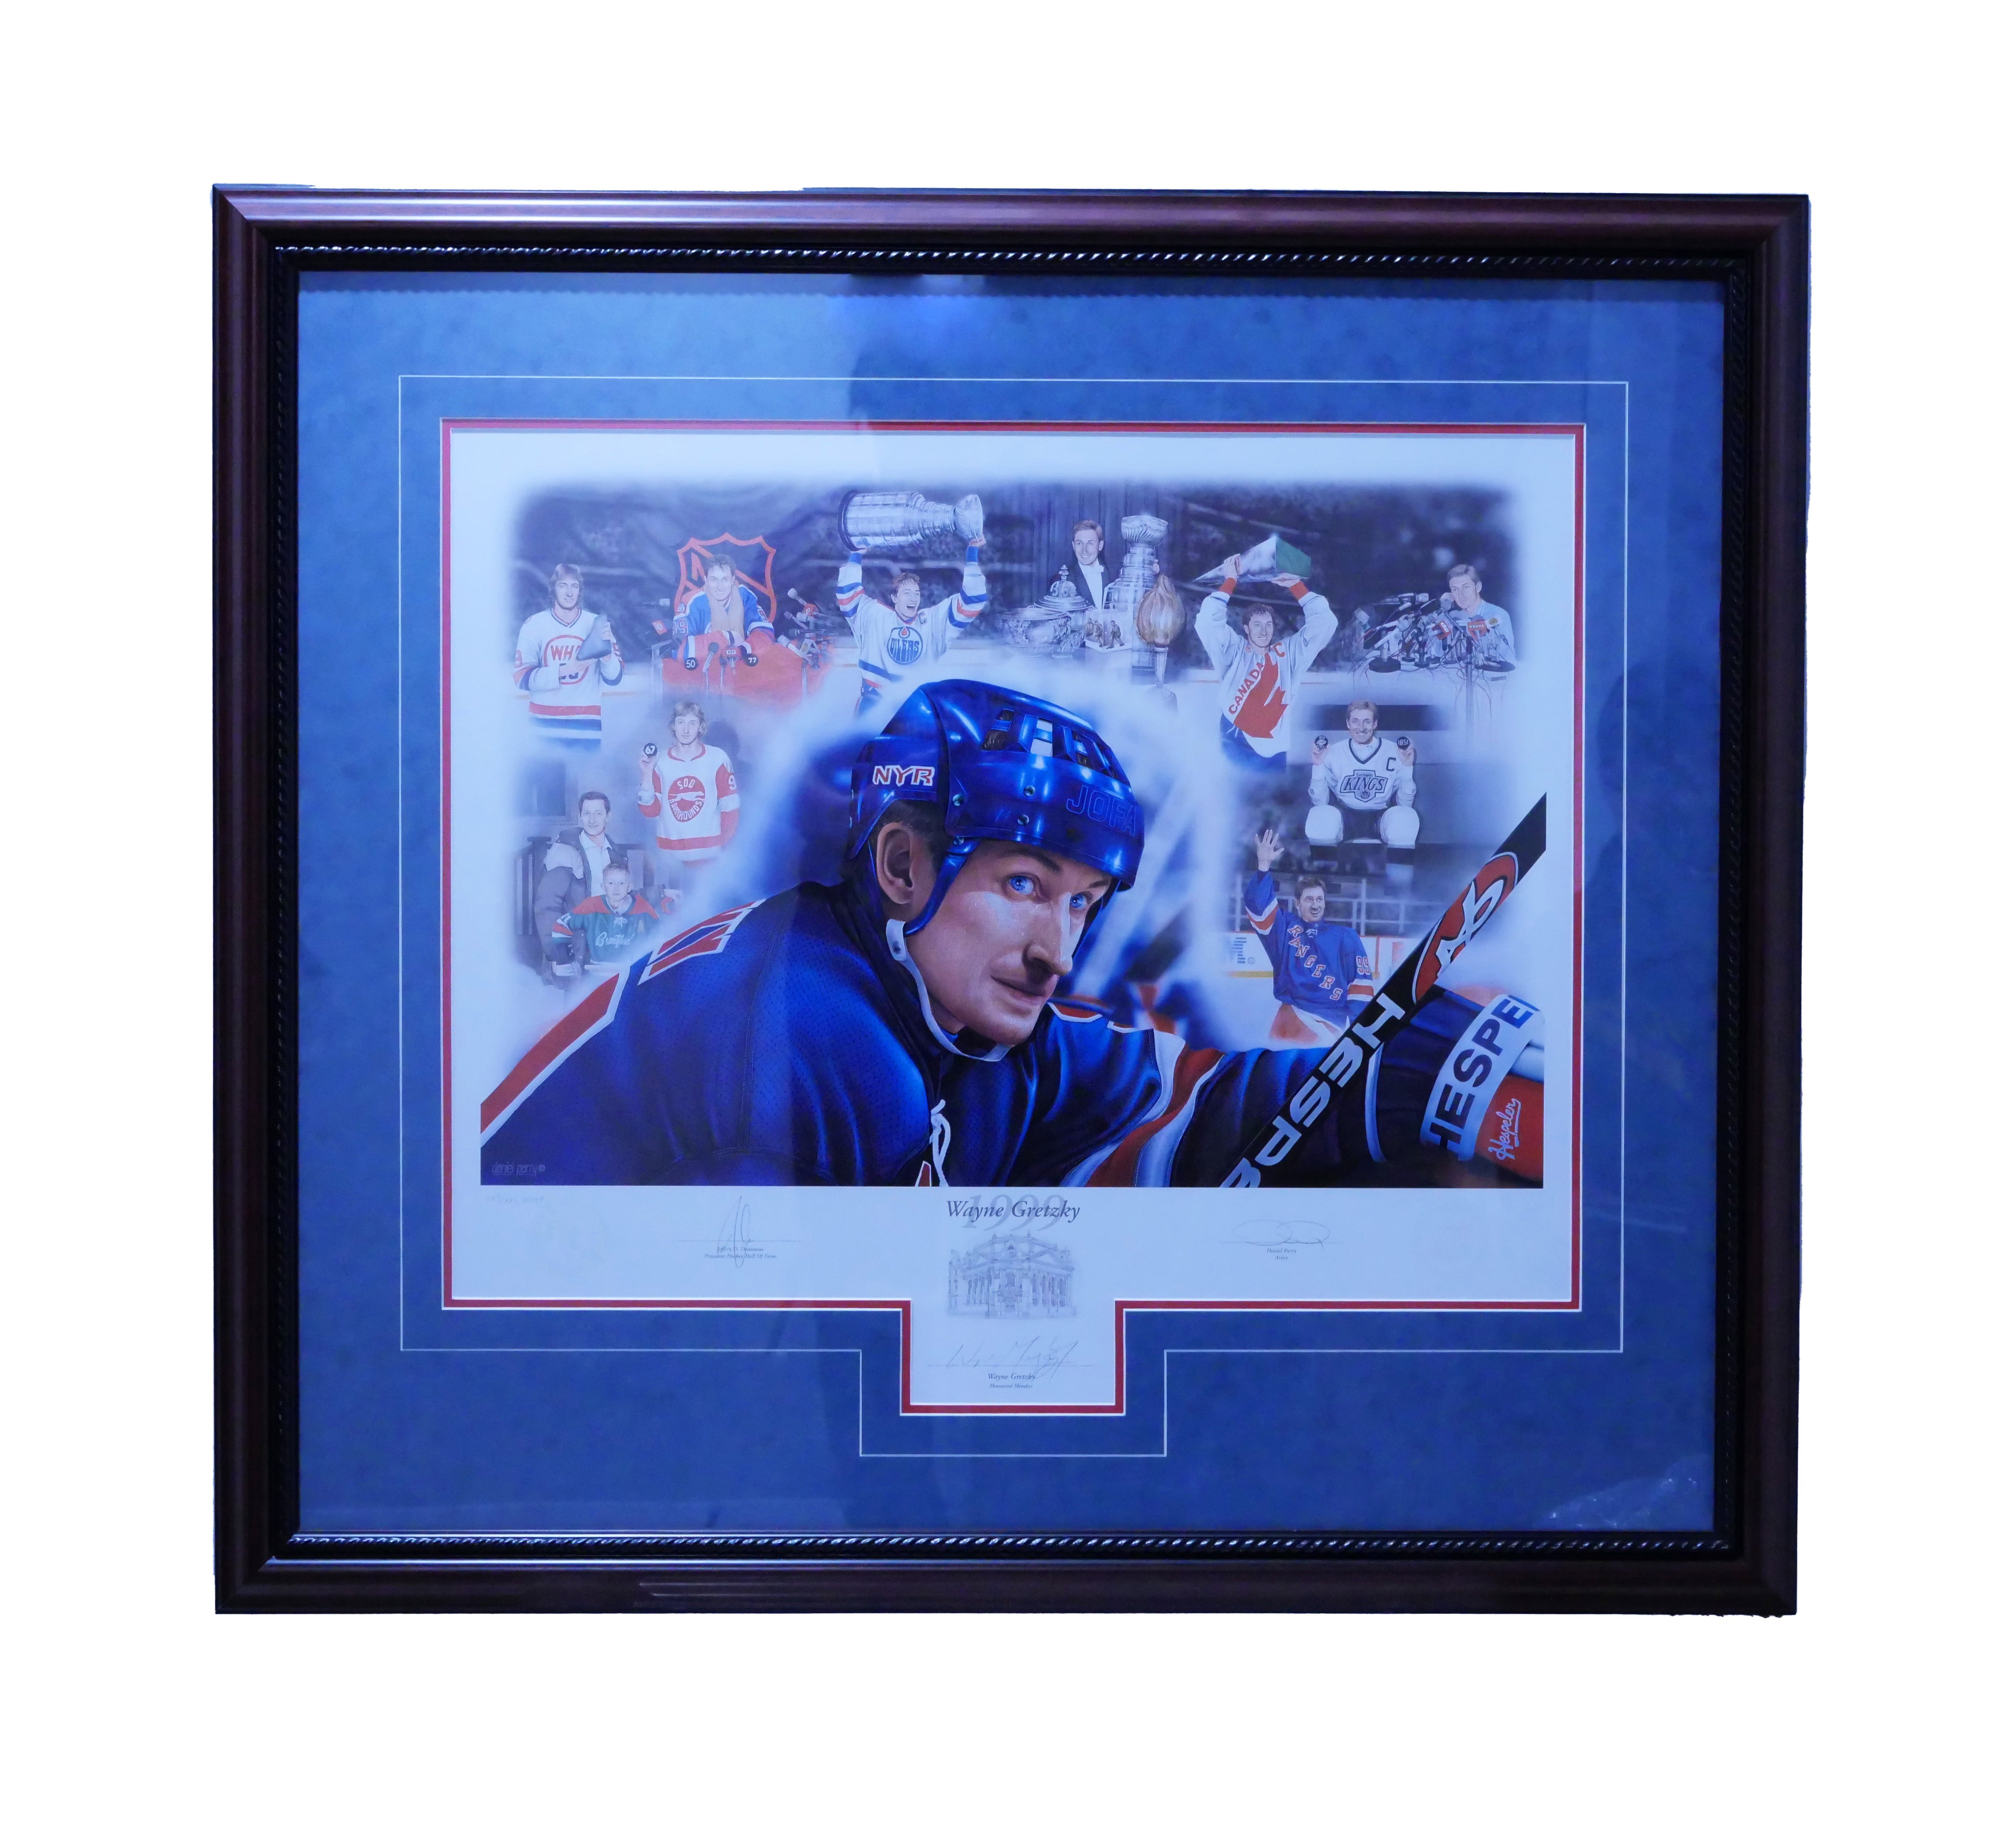 Wayne Gretzky 1999 Induction Limited Edition Signed Print